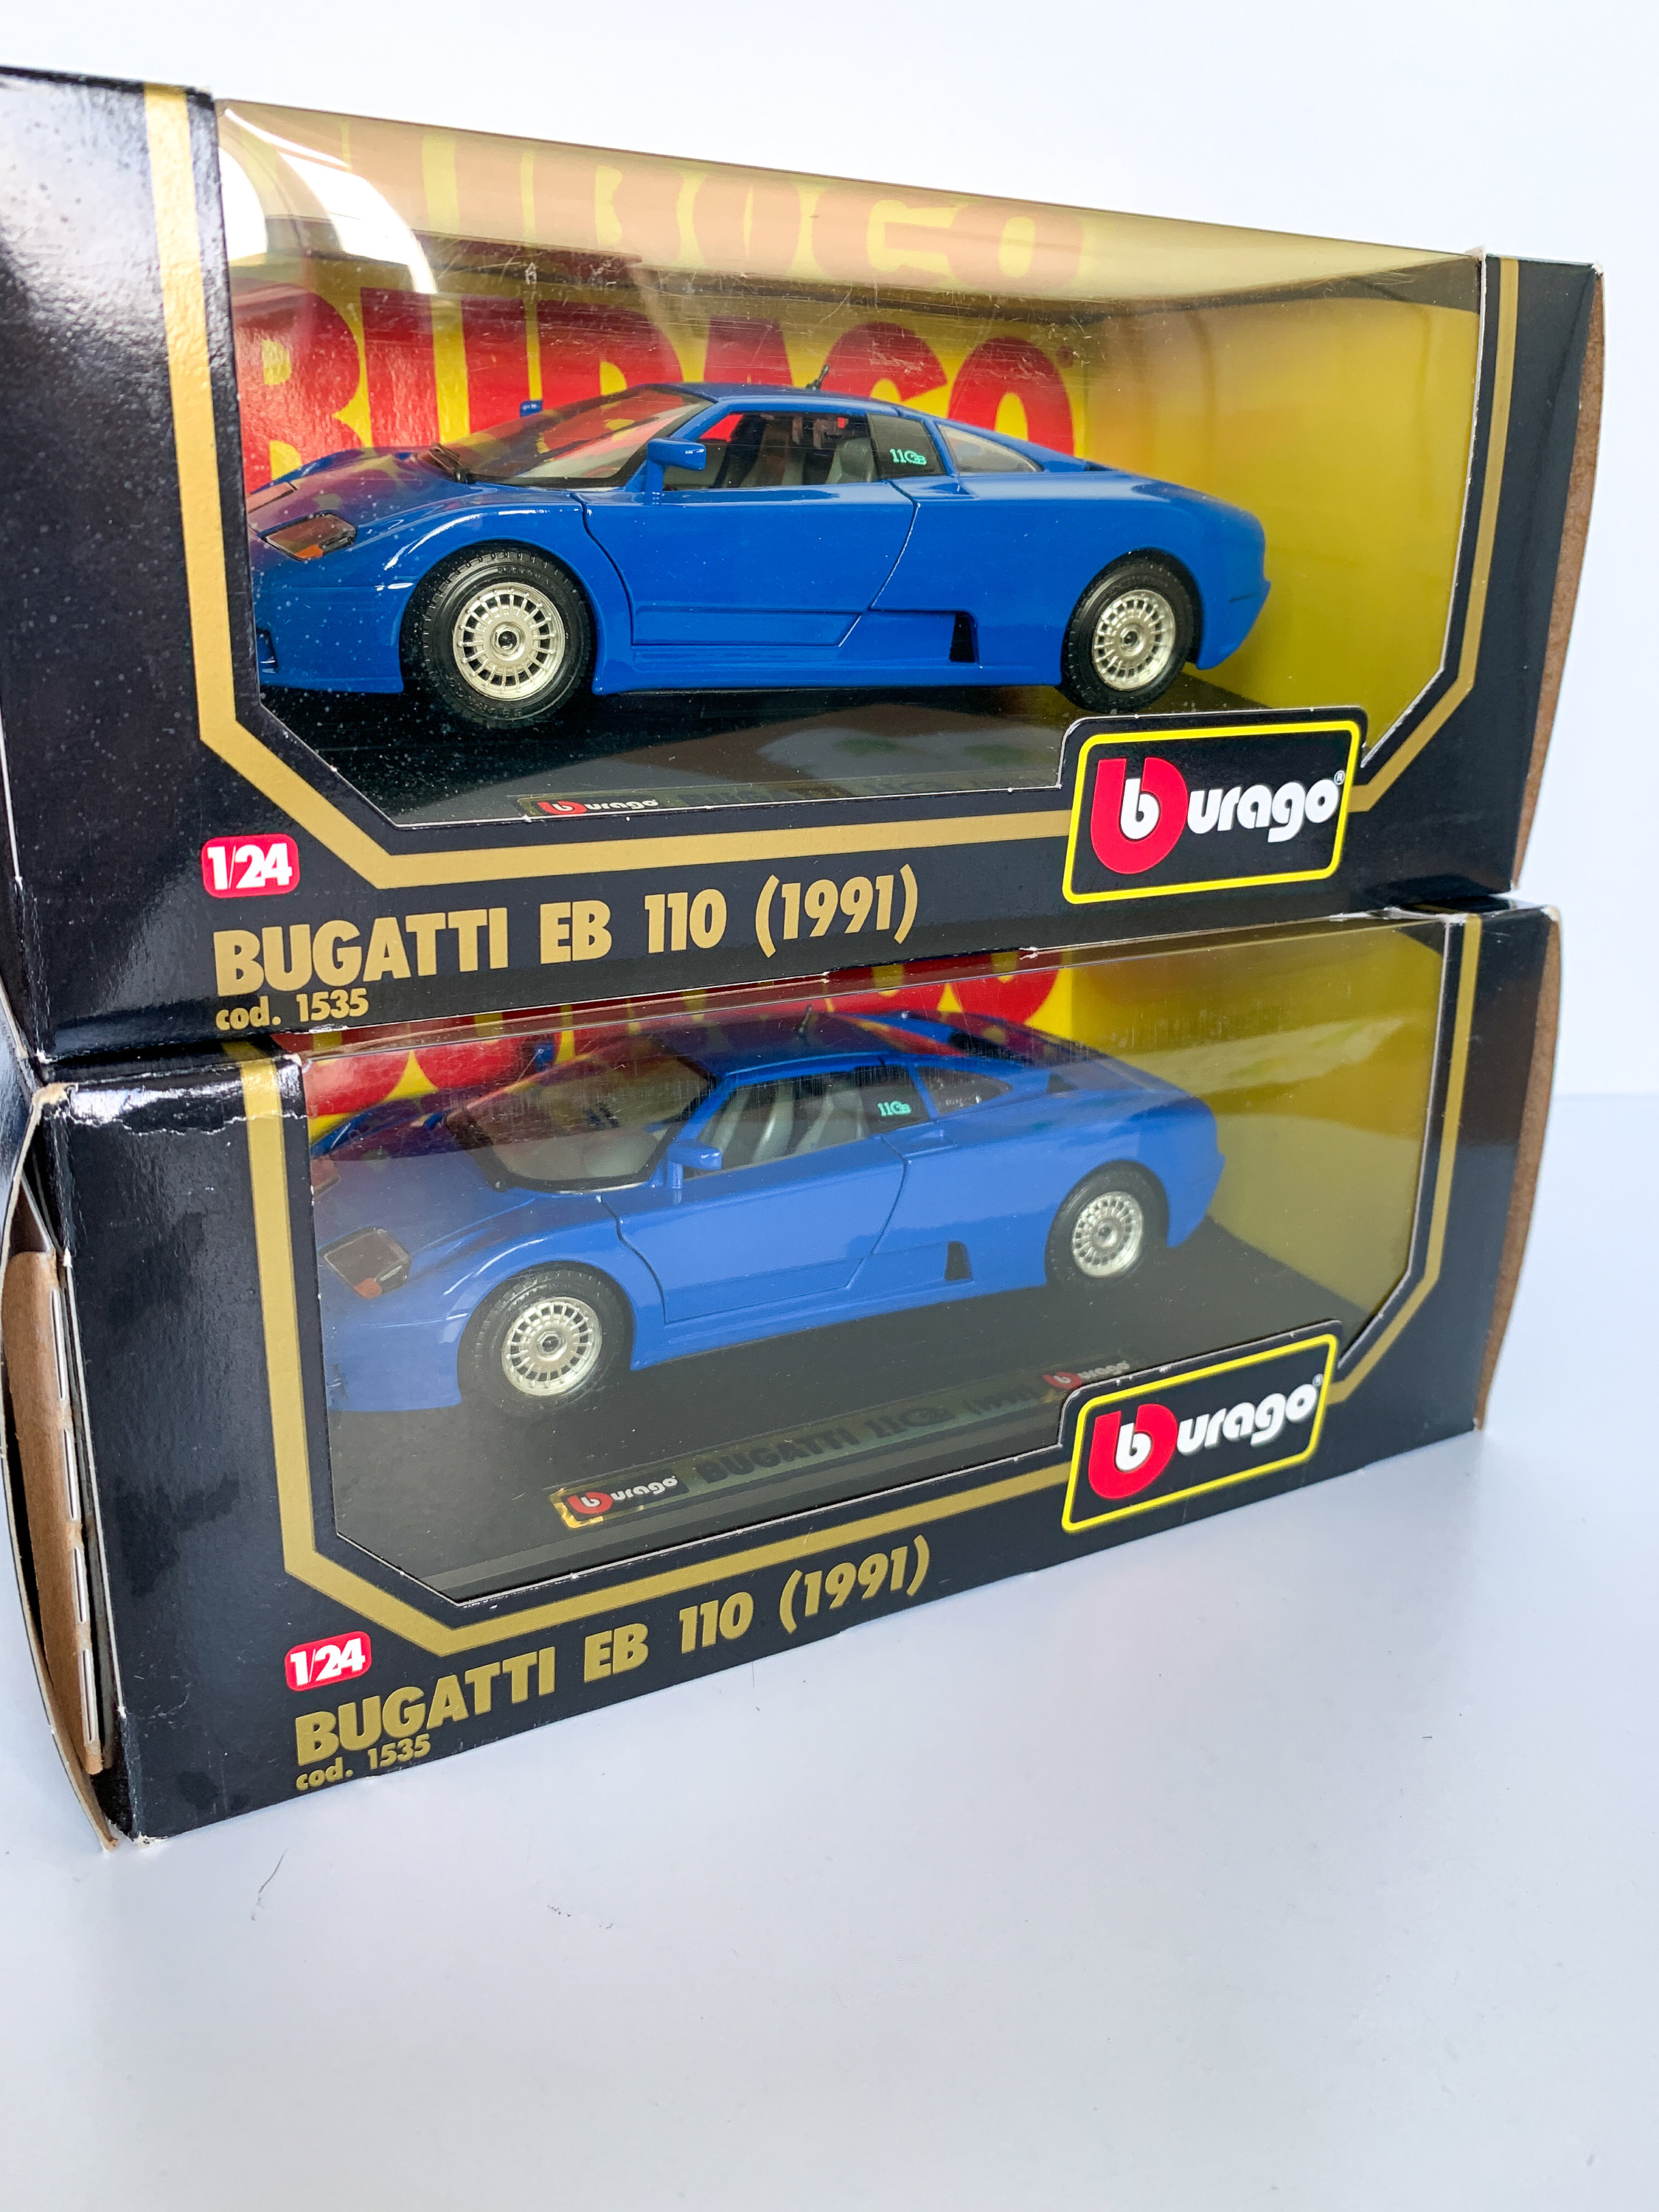 Burago Bugatti EB 110 1991 échelle 1/18 réf 3035